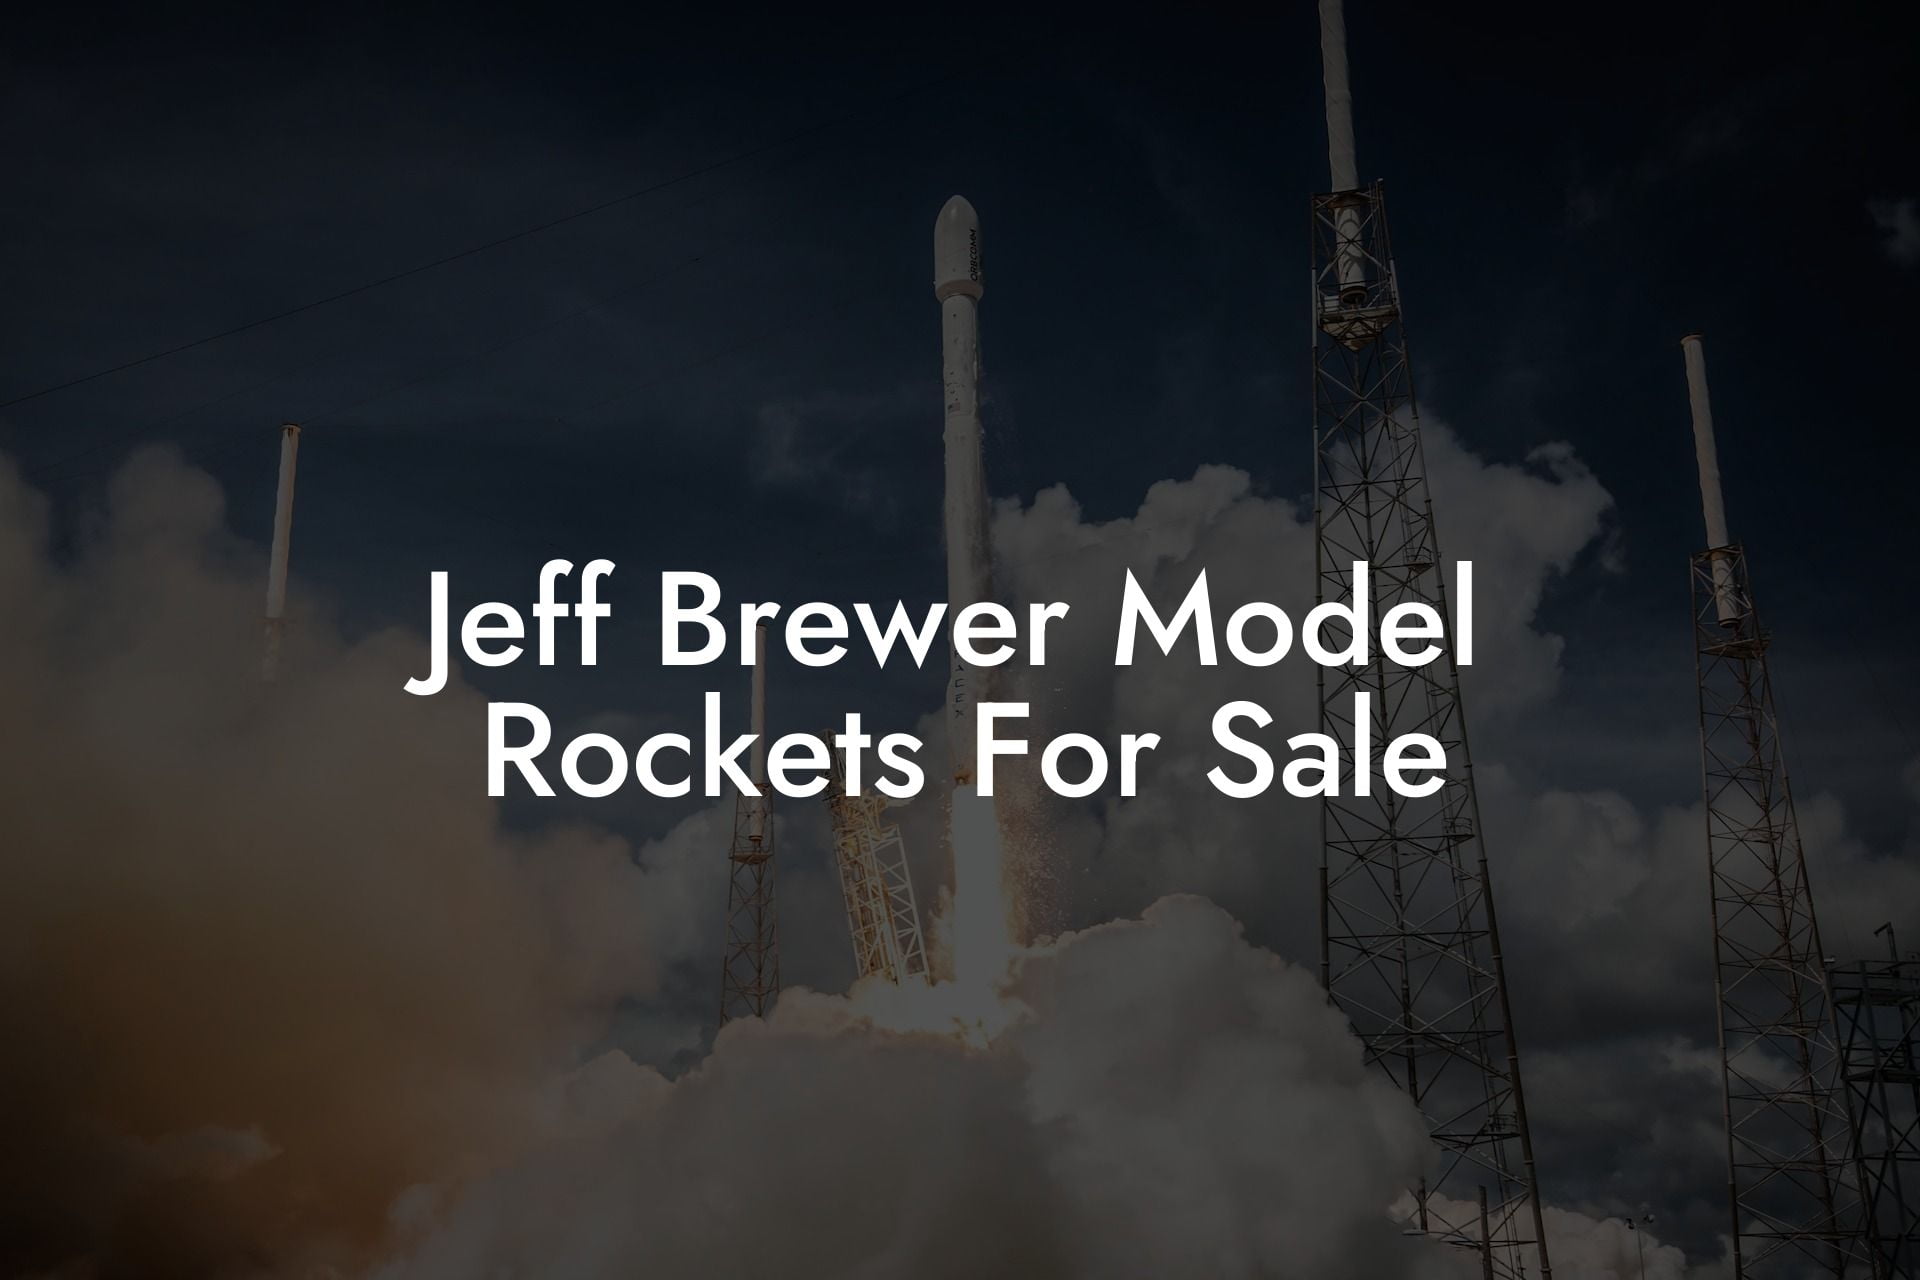 Jeff Brewer Model Rockets For Sale